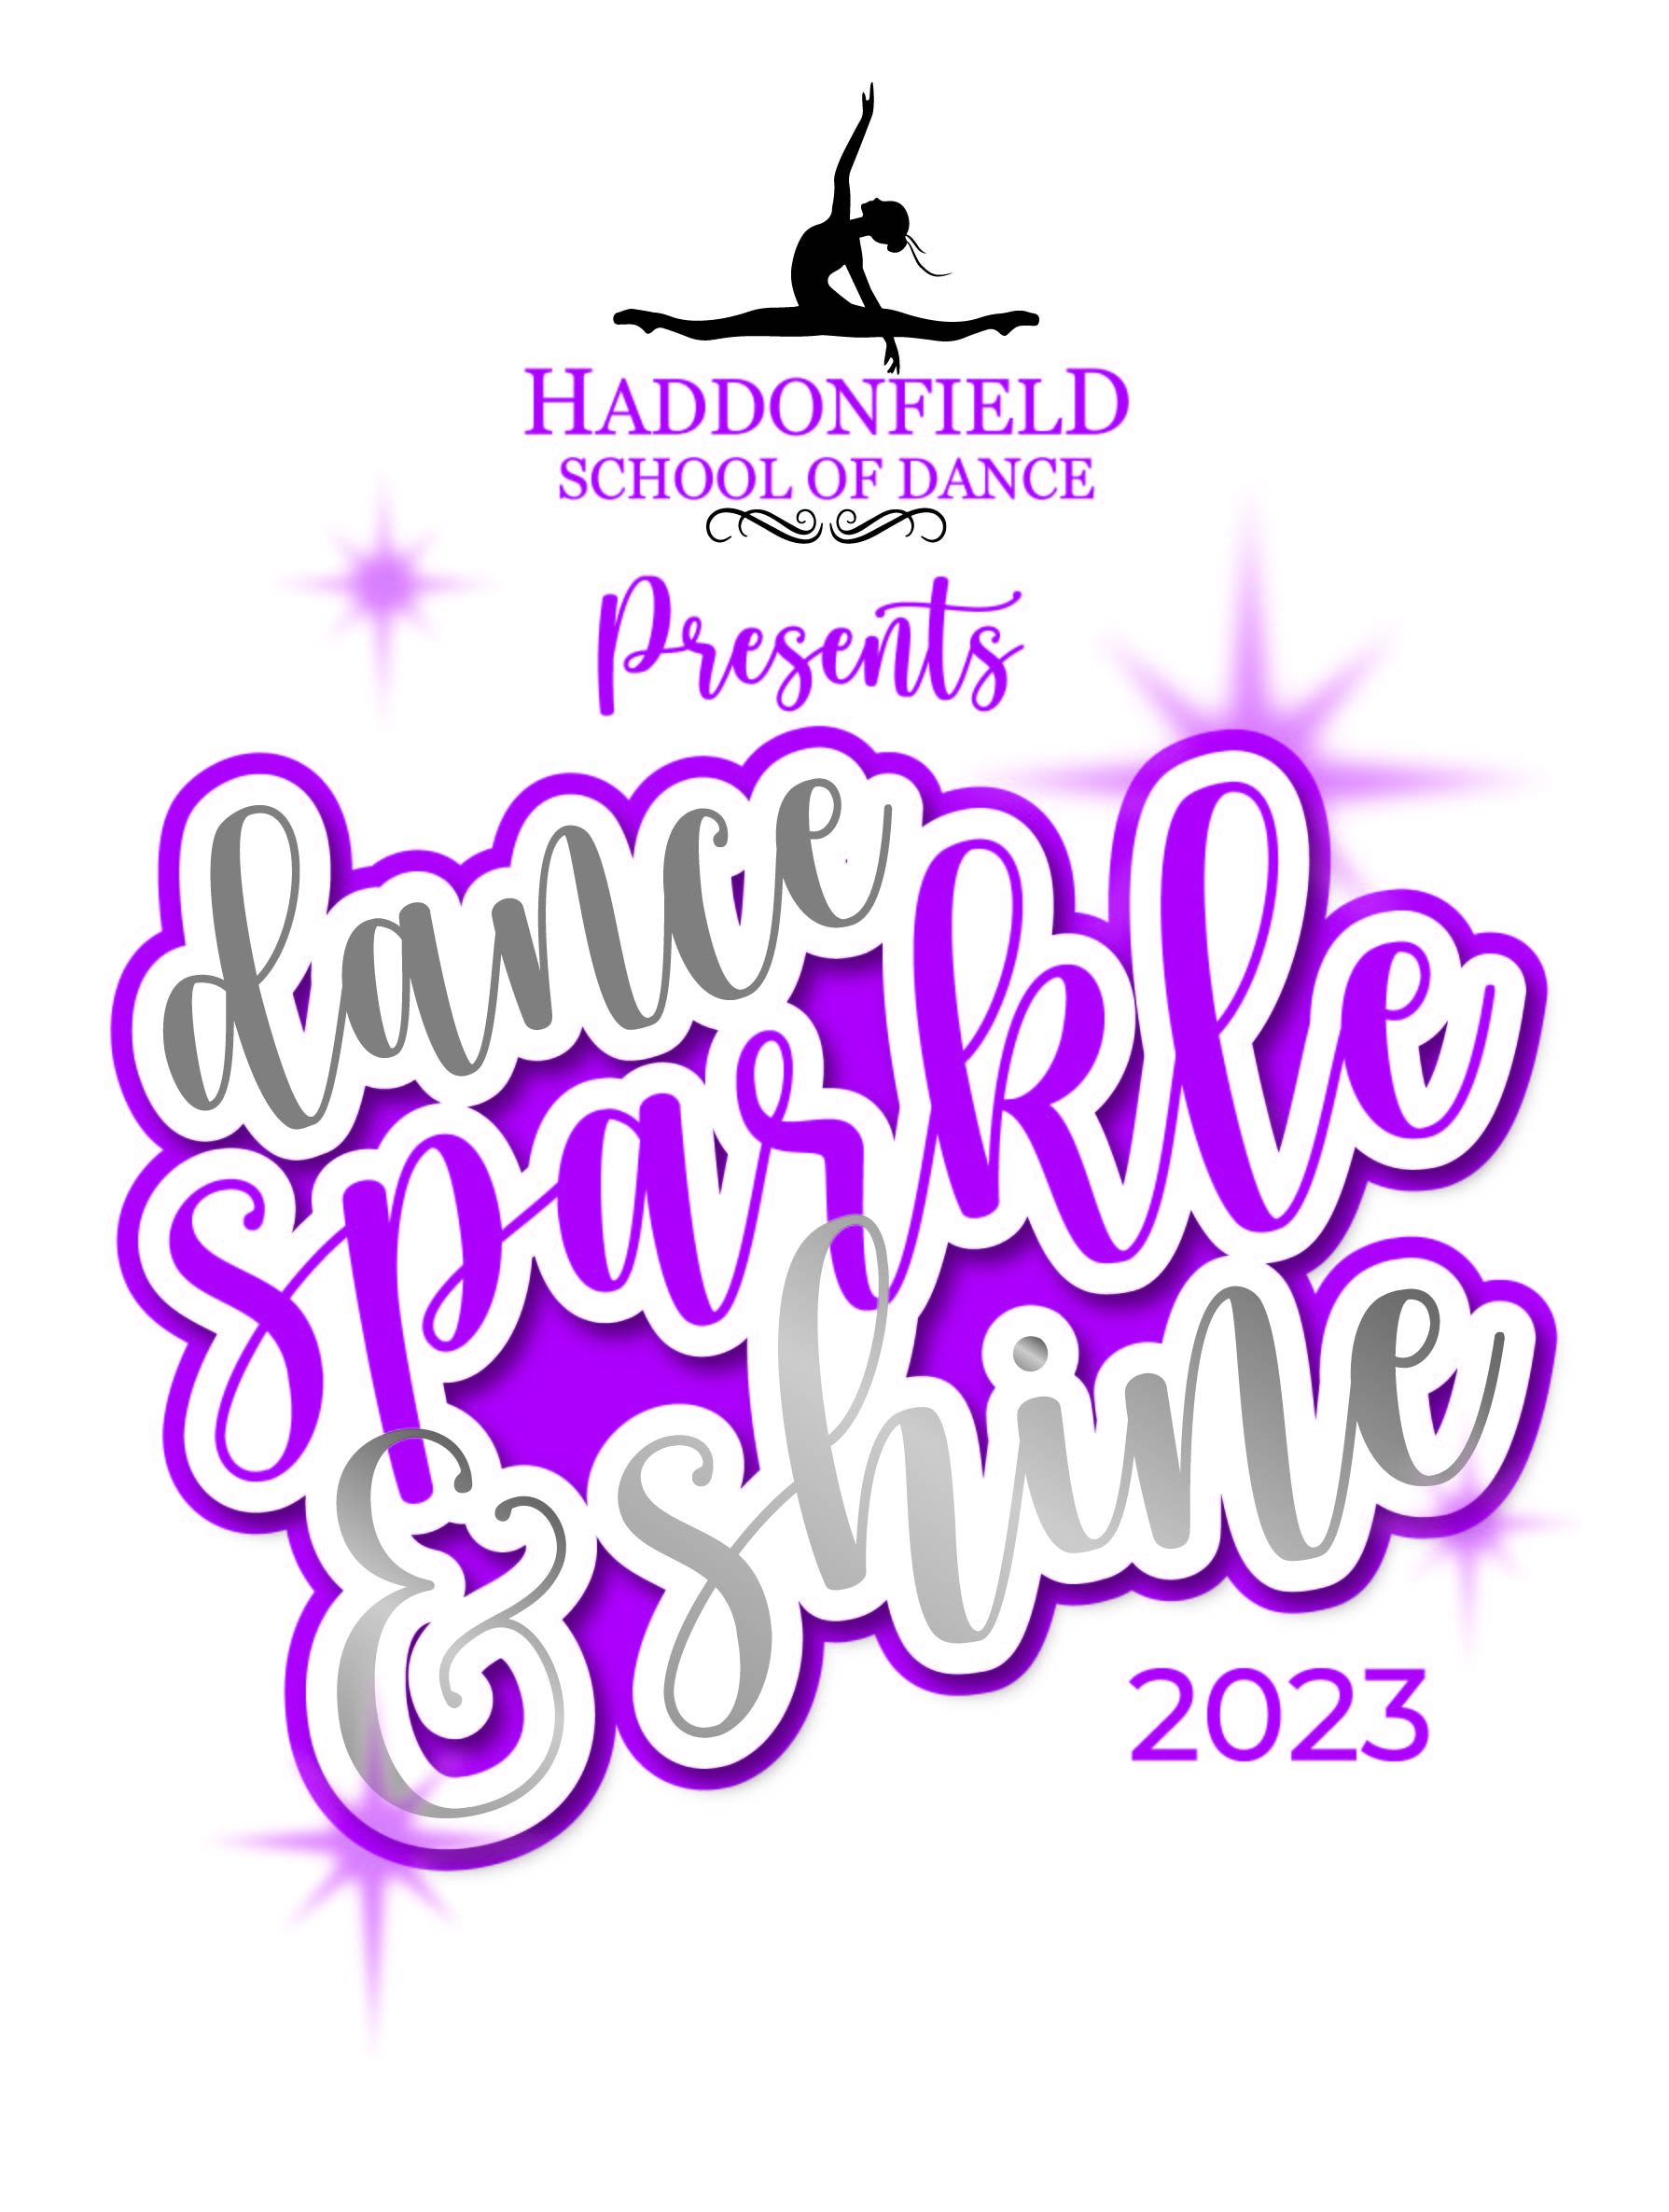 The Haddonfield School of Dance